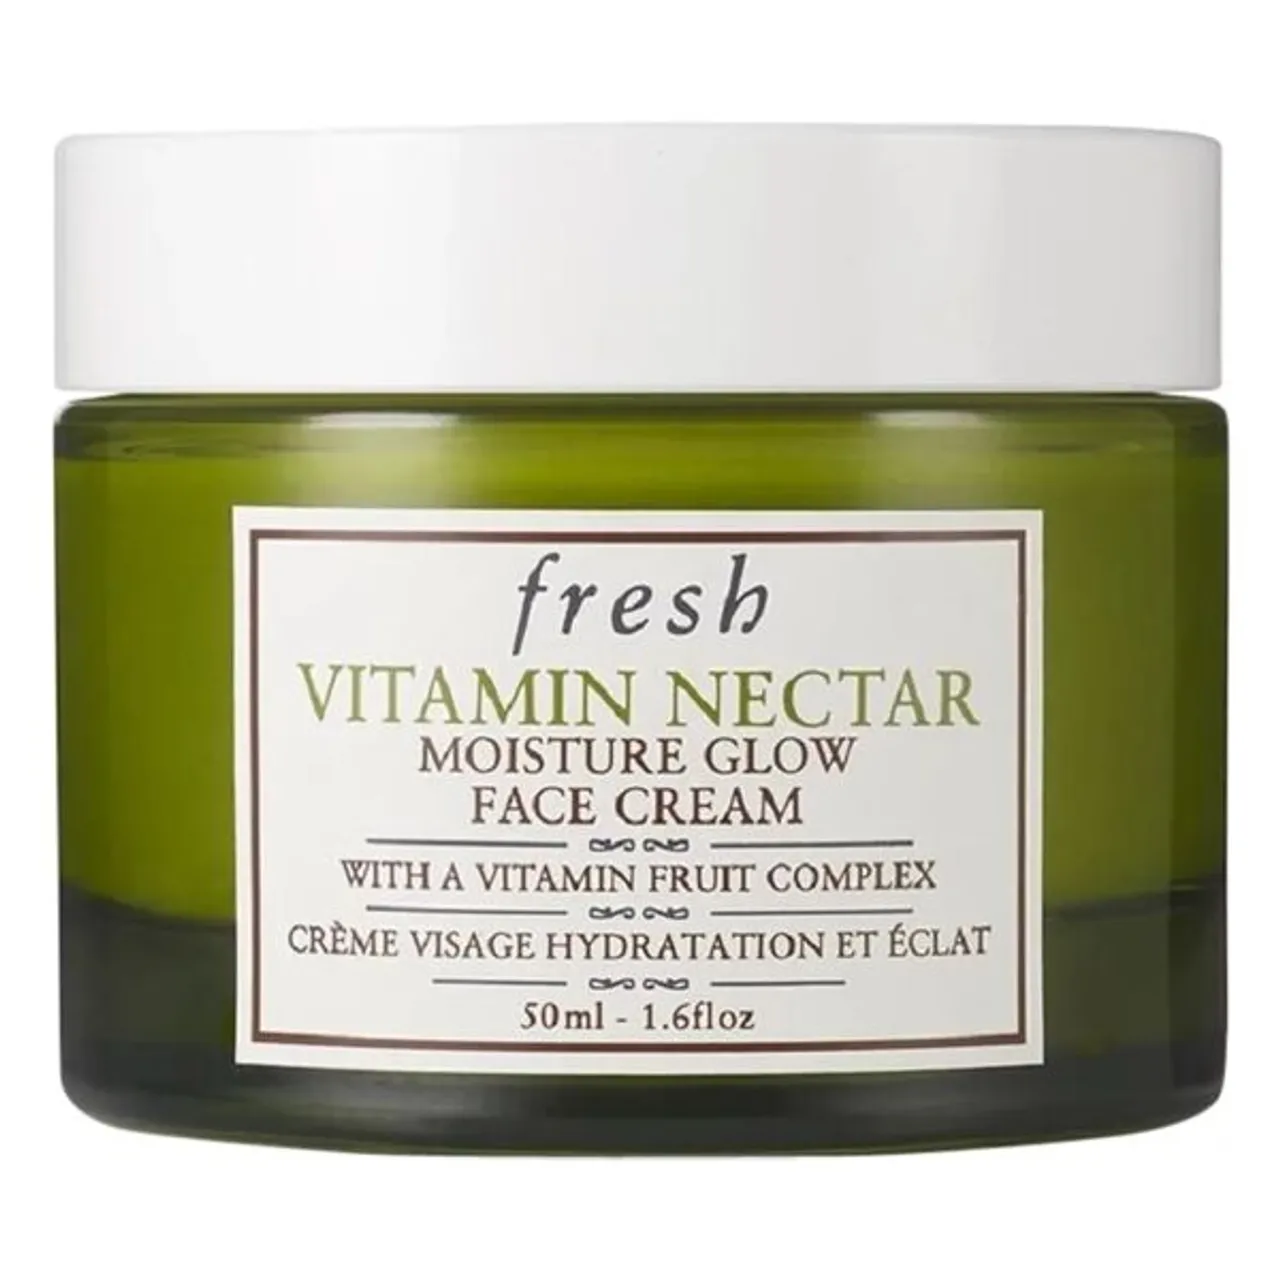 Fresh Vitamin Nectar Moisture Glow Face Cream, 50ml - Unisex - Size: 50ml